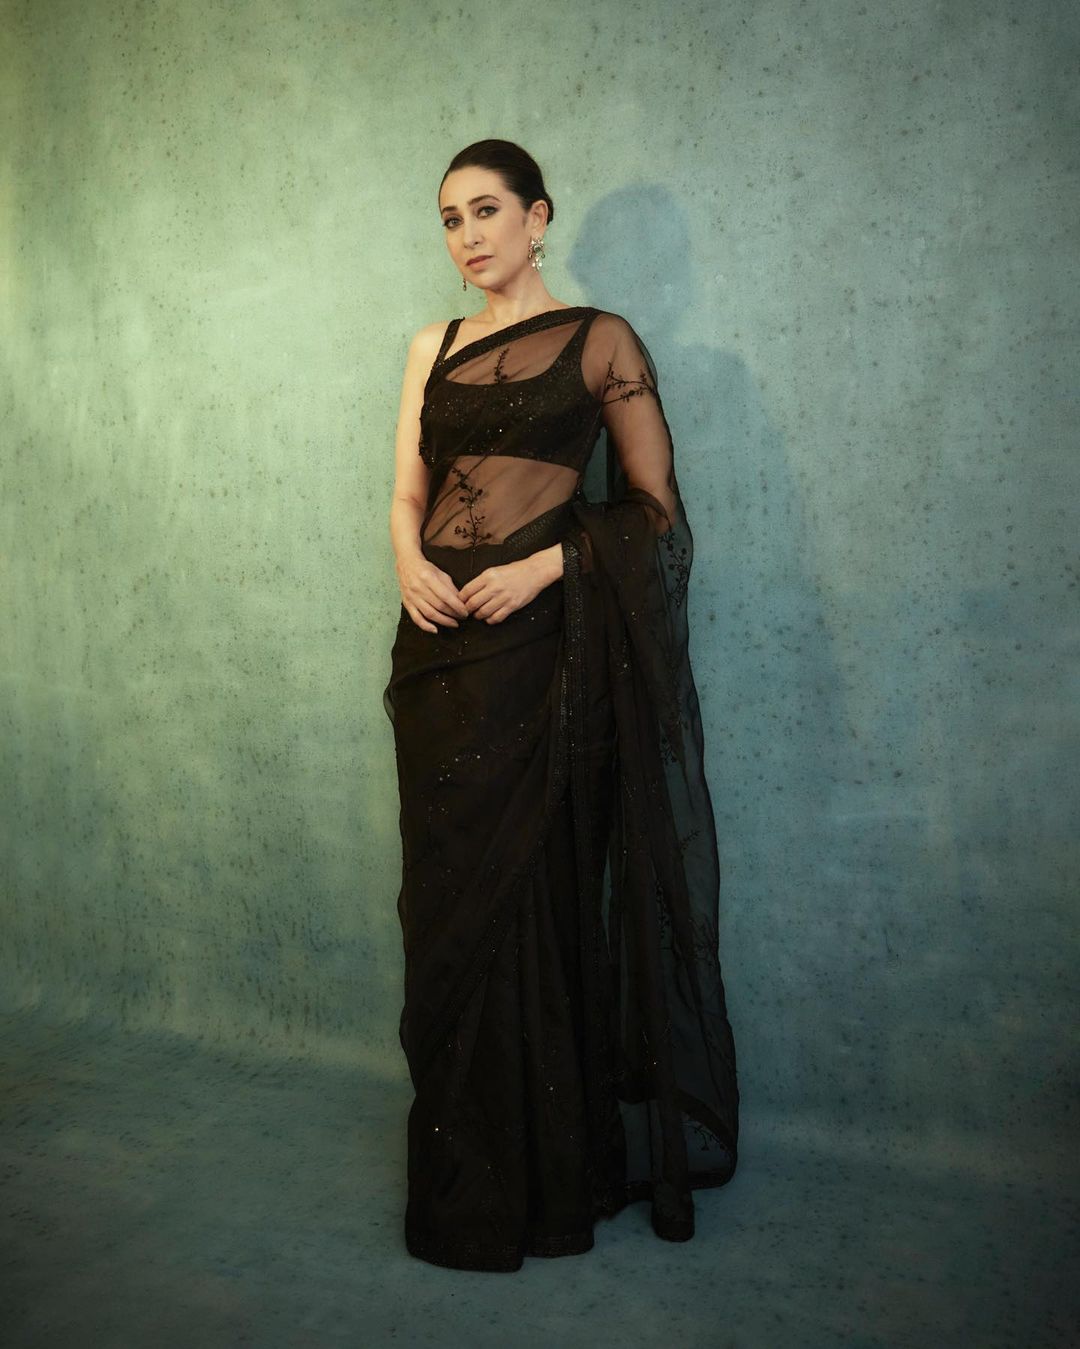 Karisma Kapoor looks divine draped in the black sheer saree